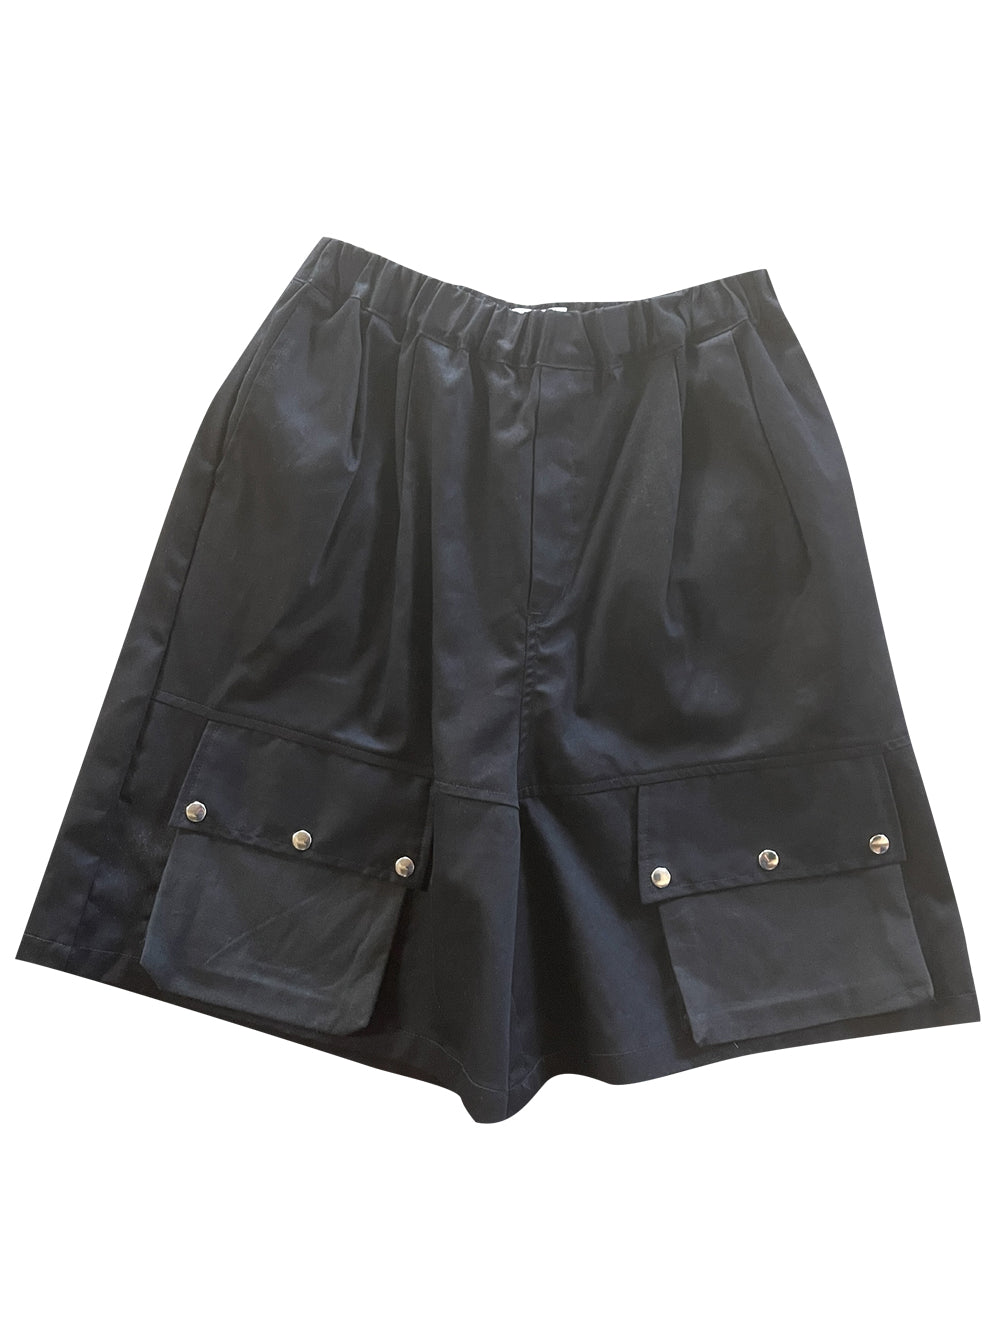 PREORDER: Pleated Black Pocket Shorts